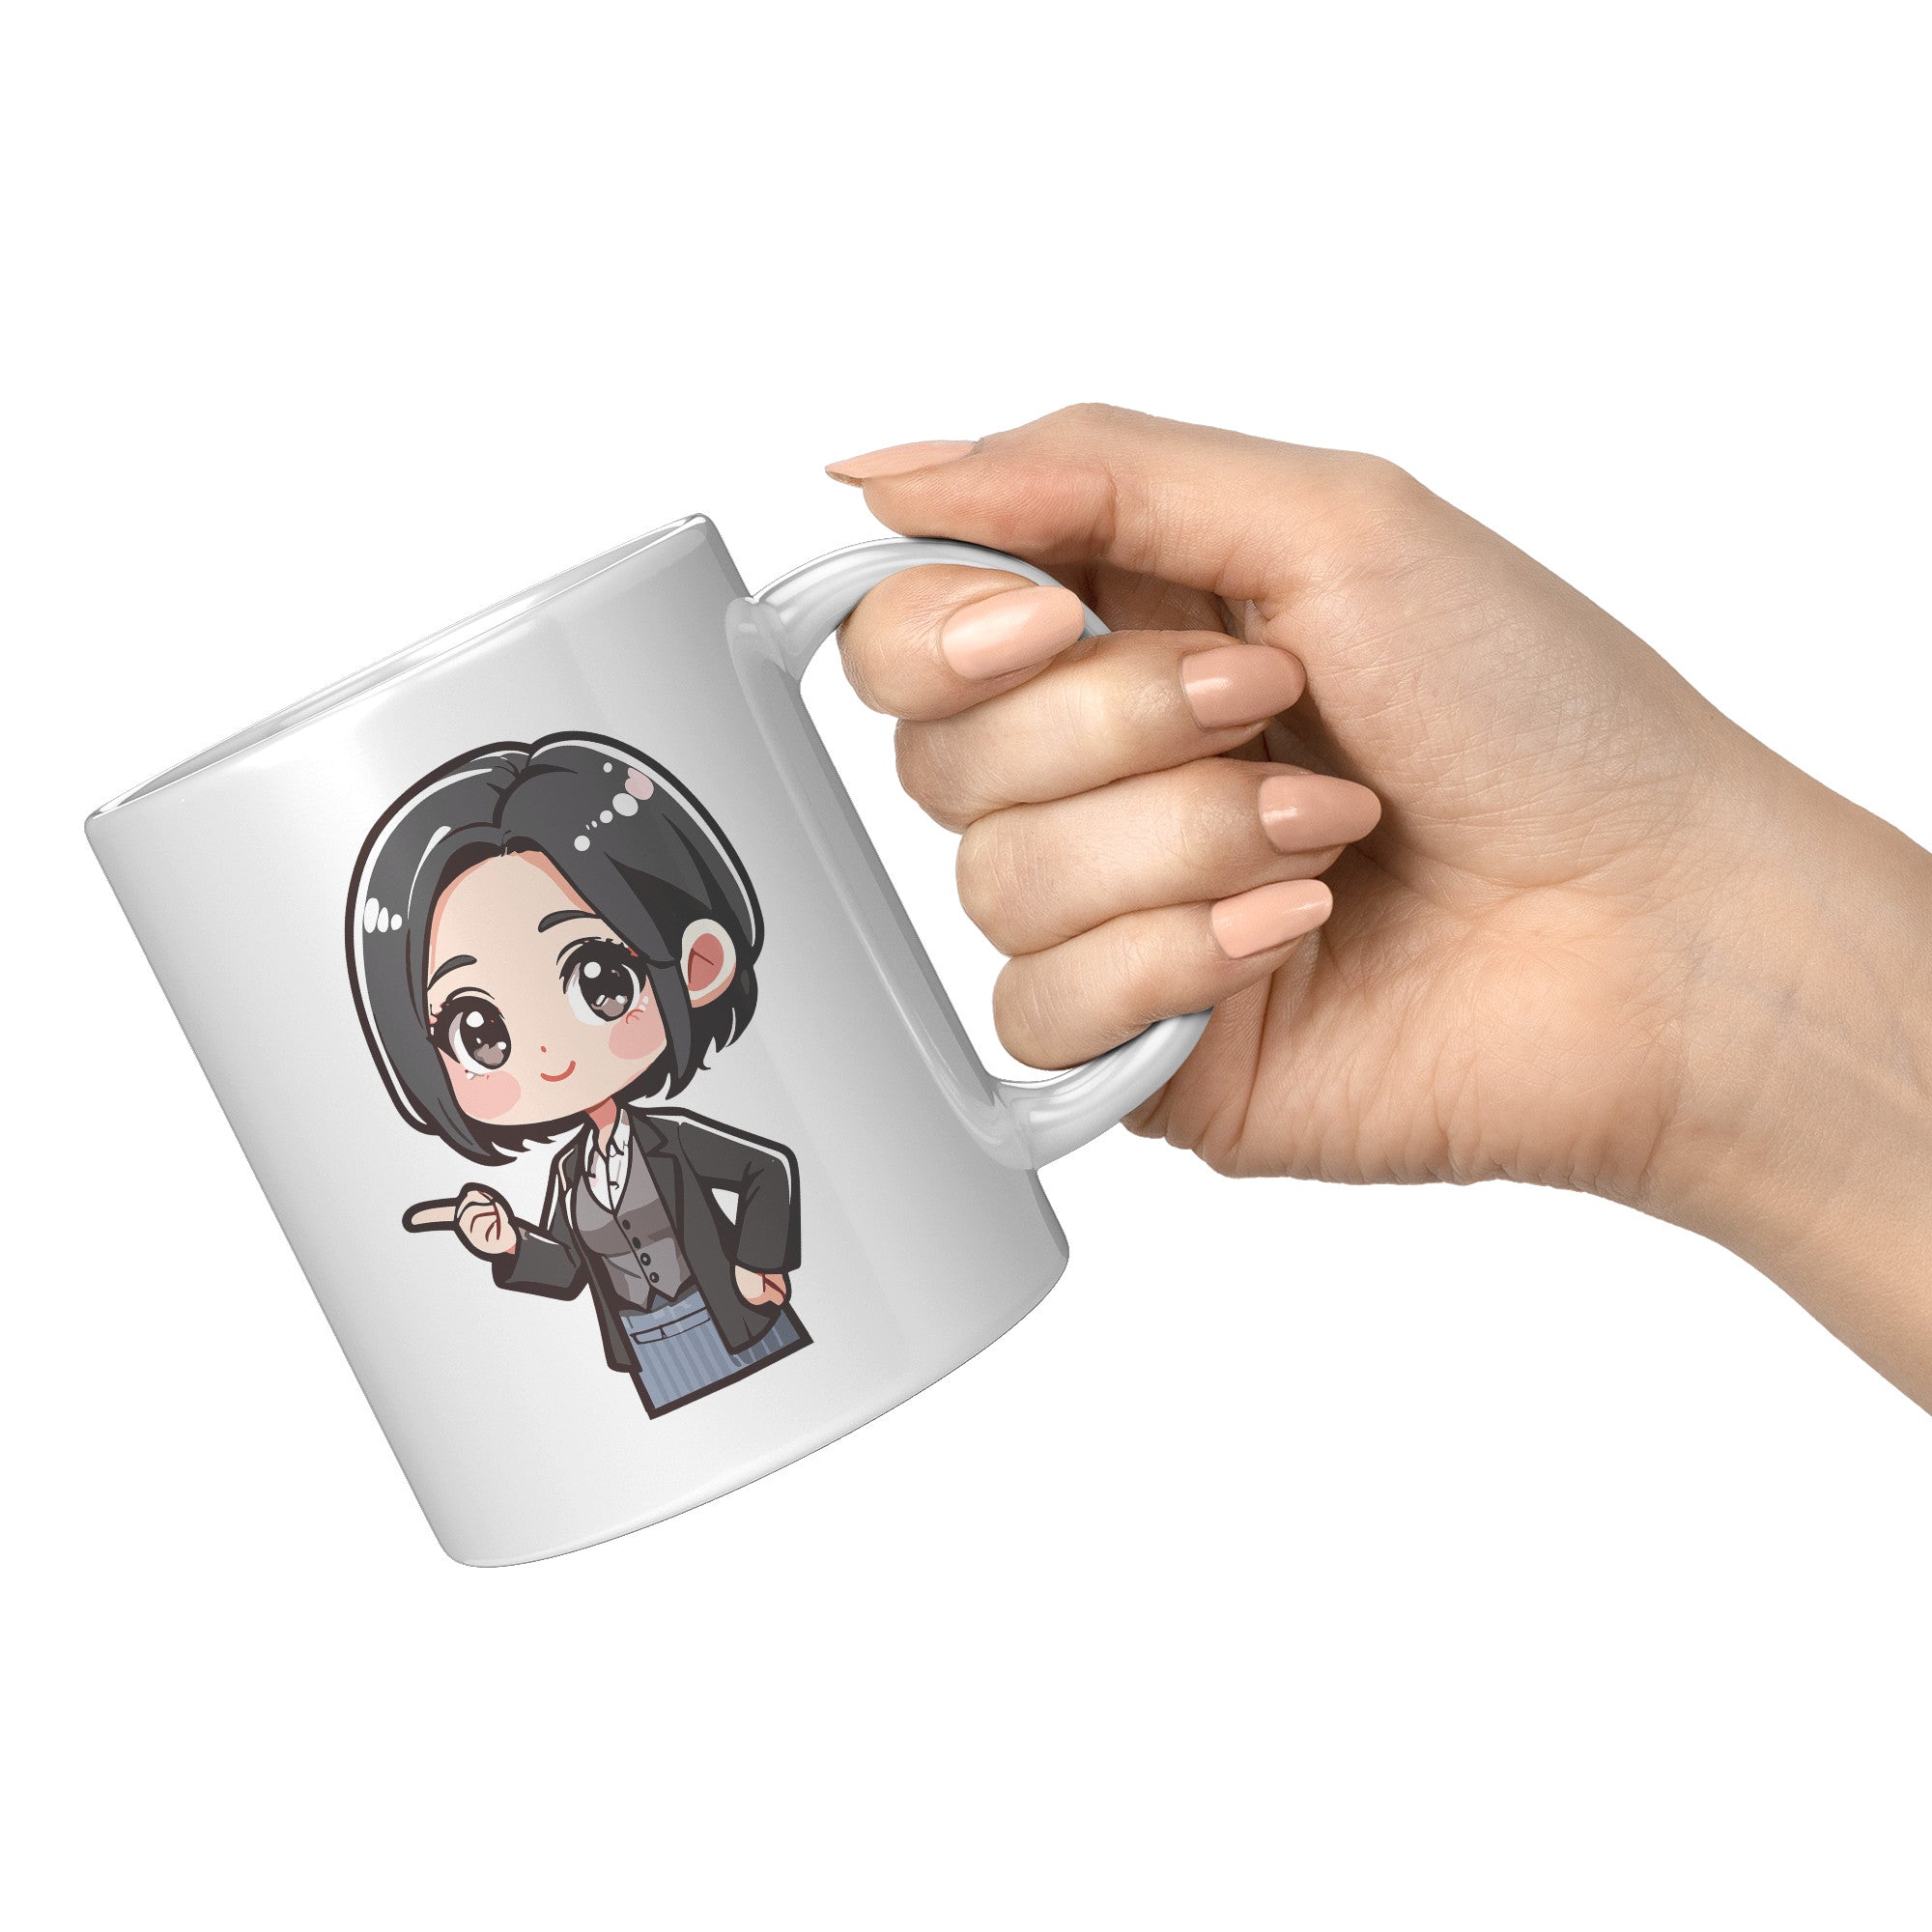 "Marites Gossip Queen Coffee Mug - Cute Cartoon 'Ano Ang Latest?' Cup - Perfect Chismosa Gift - Filipino Slang Tea Mug" - I